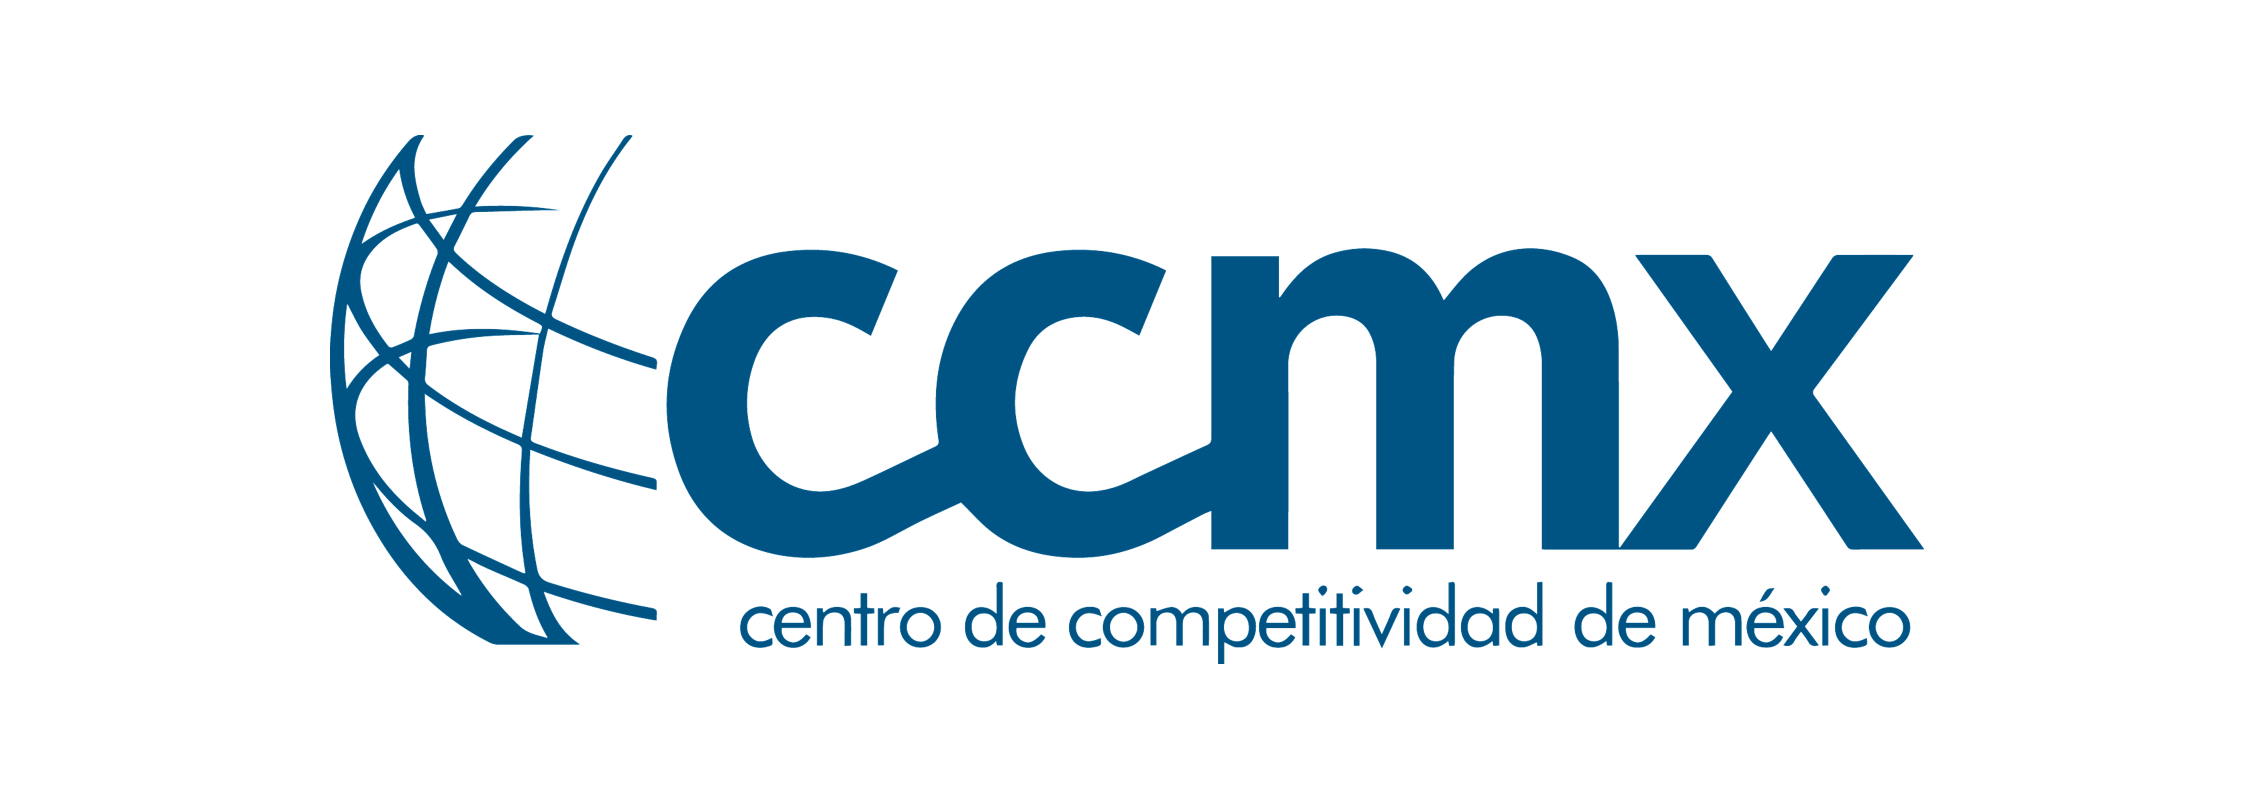 ccmx-logo